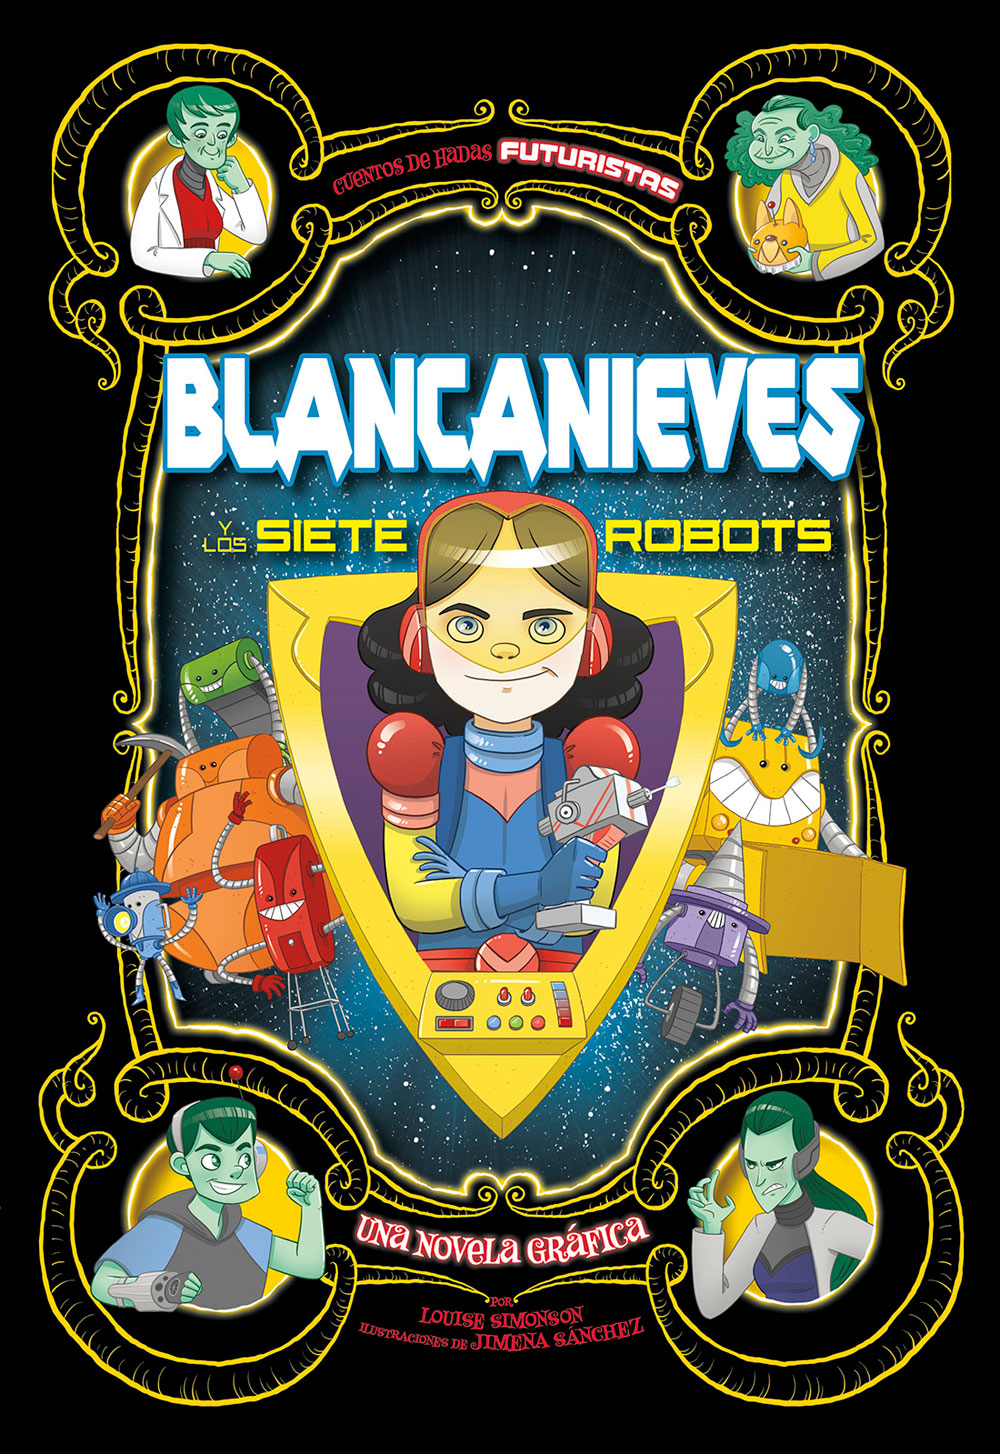 Futuristas: Blancanieves y los siete robots Spanish Level 4+ Graphic Reader